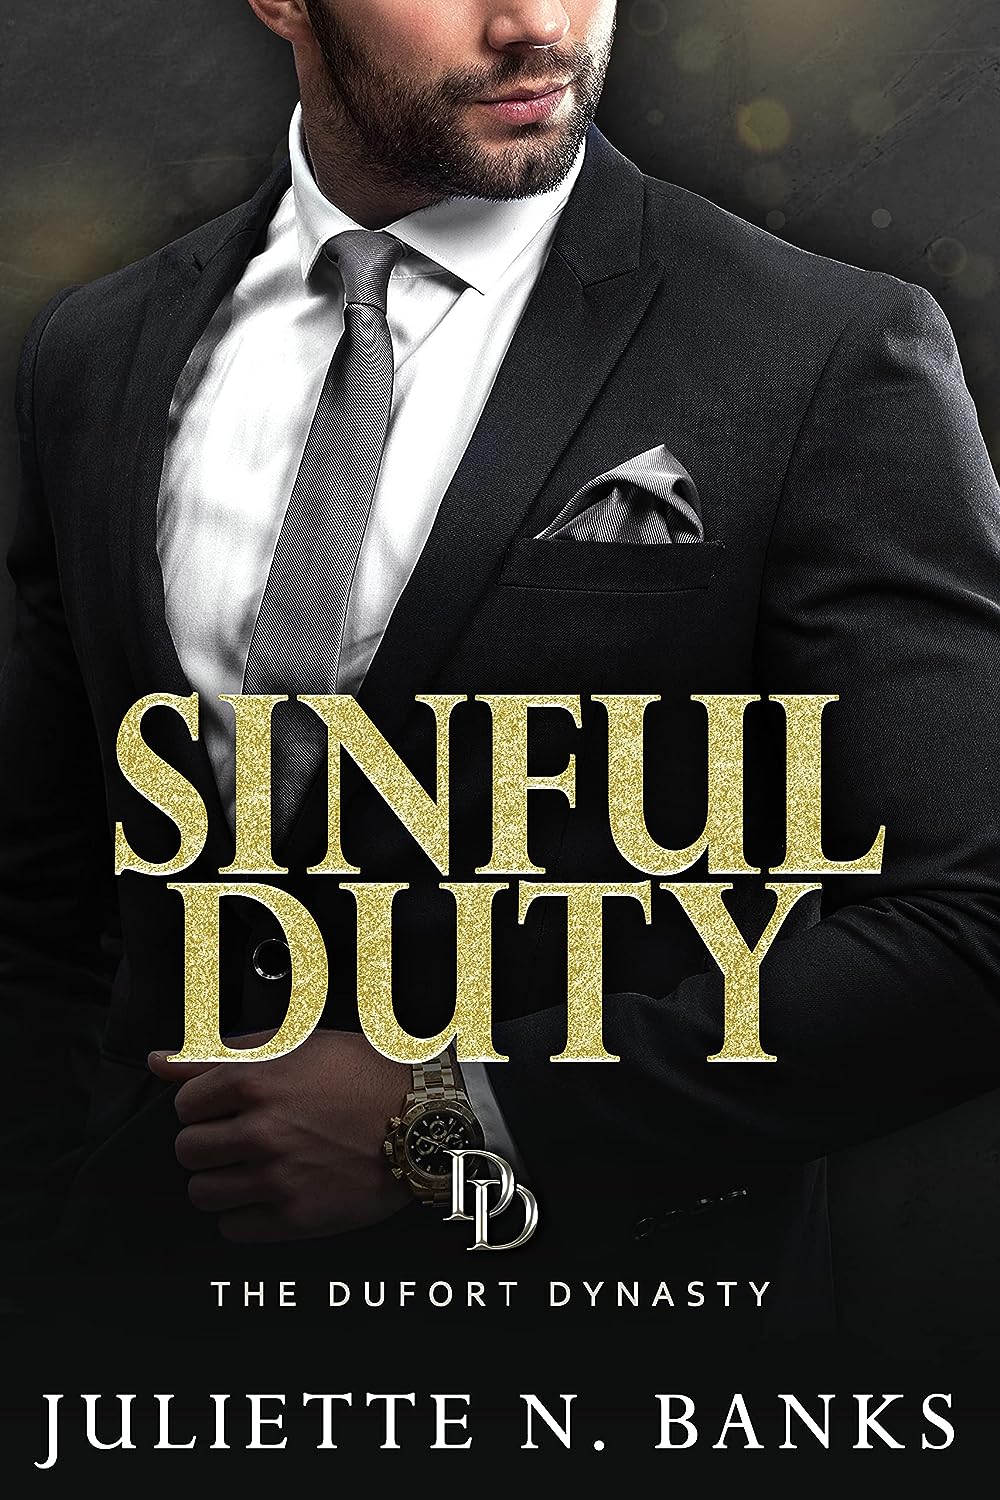 Sinful Duty Steamy Billionaire Romance by Bestselling Author Juliette N Banks